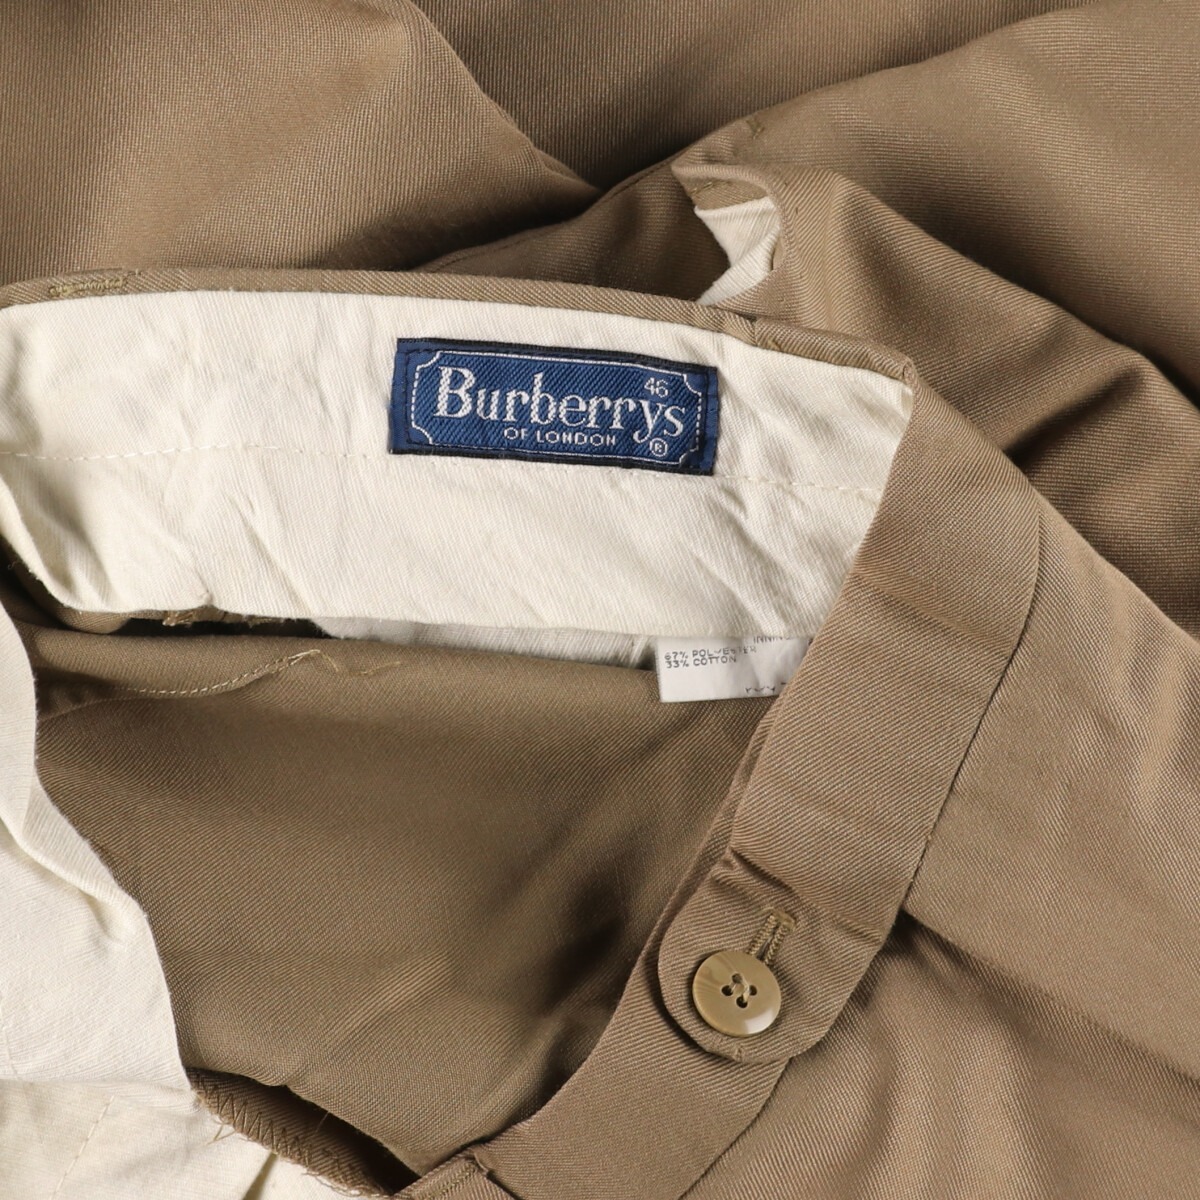  б/у одежда Burberry Burberry\'s BURBERRYS OF LONDON two tuck слаксы брюки мужской w36 Vintage /eaa367332 [SS2403]